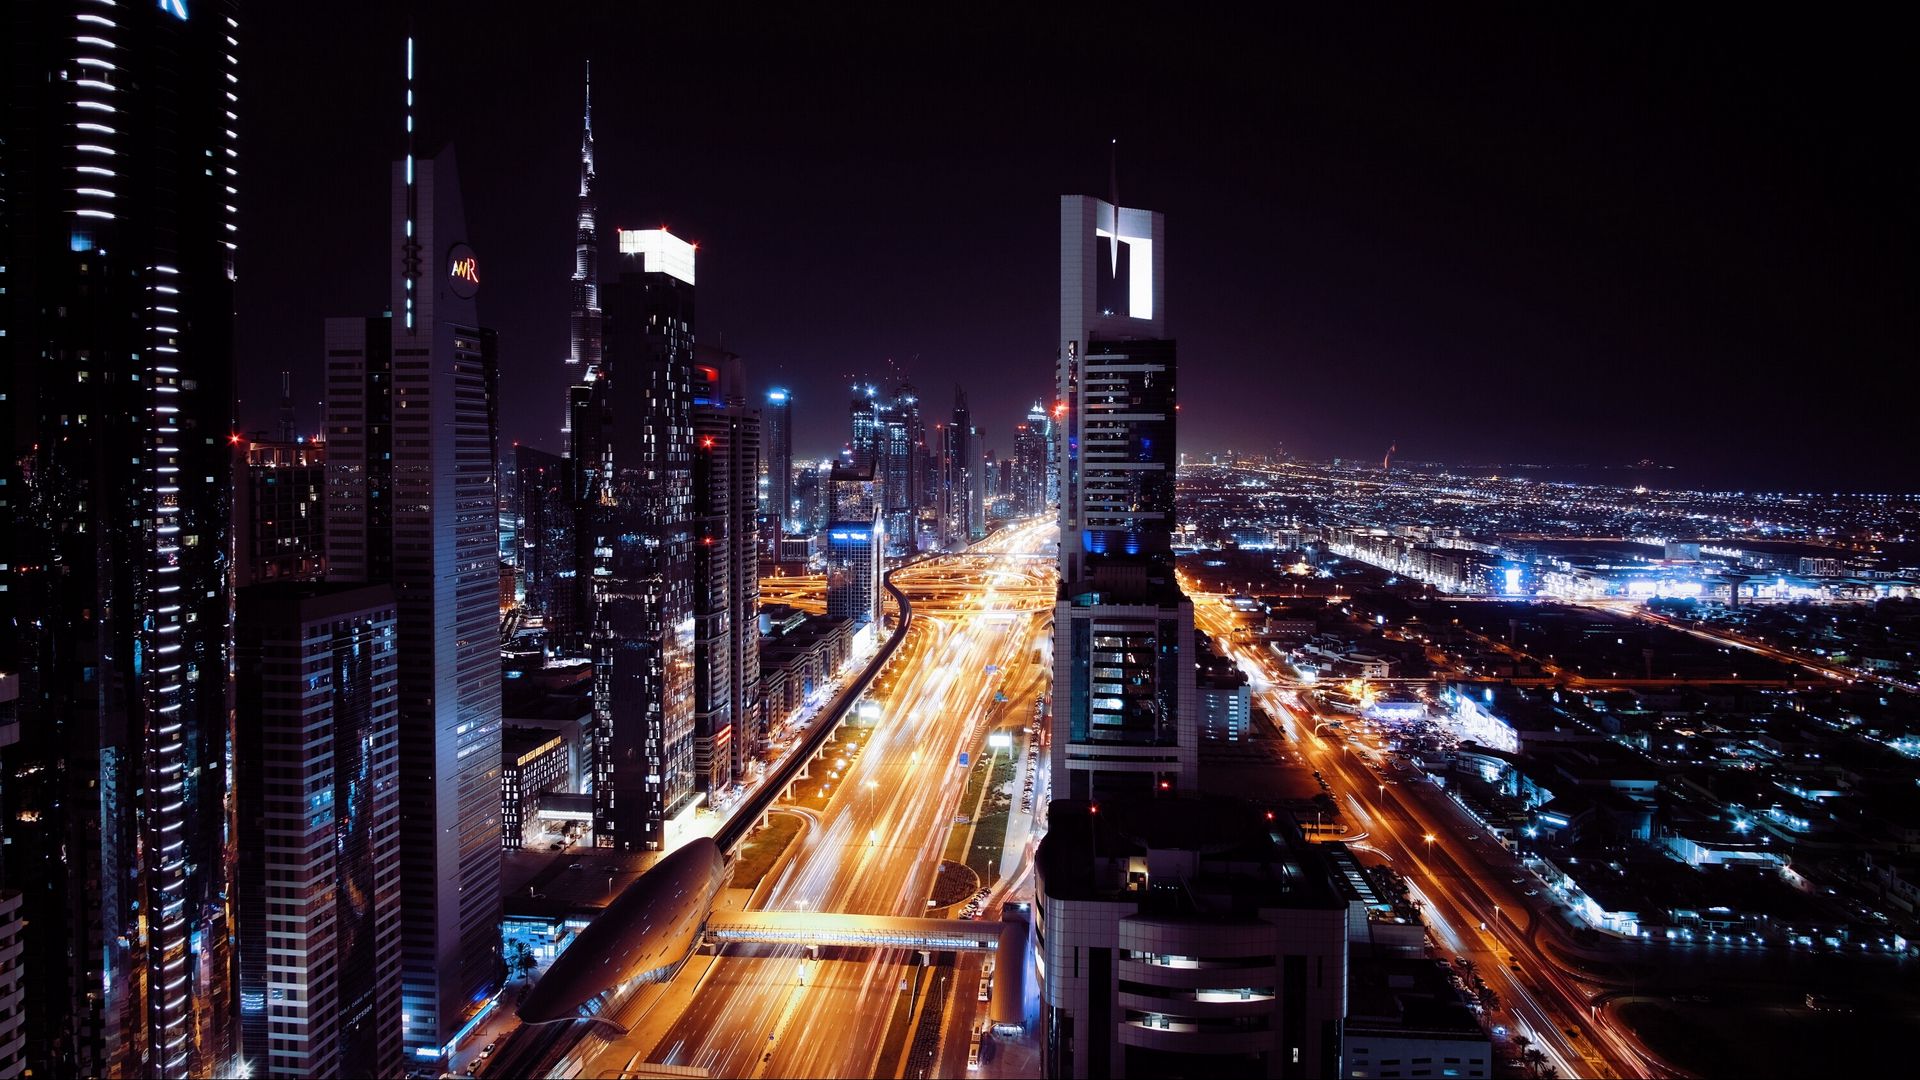 Dubai Photos, Download The BEST Free Dubai Stock Photos & HD Images